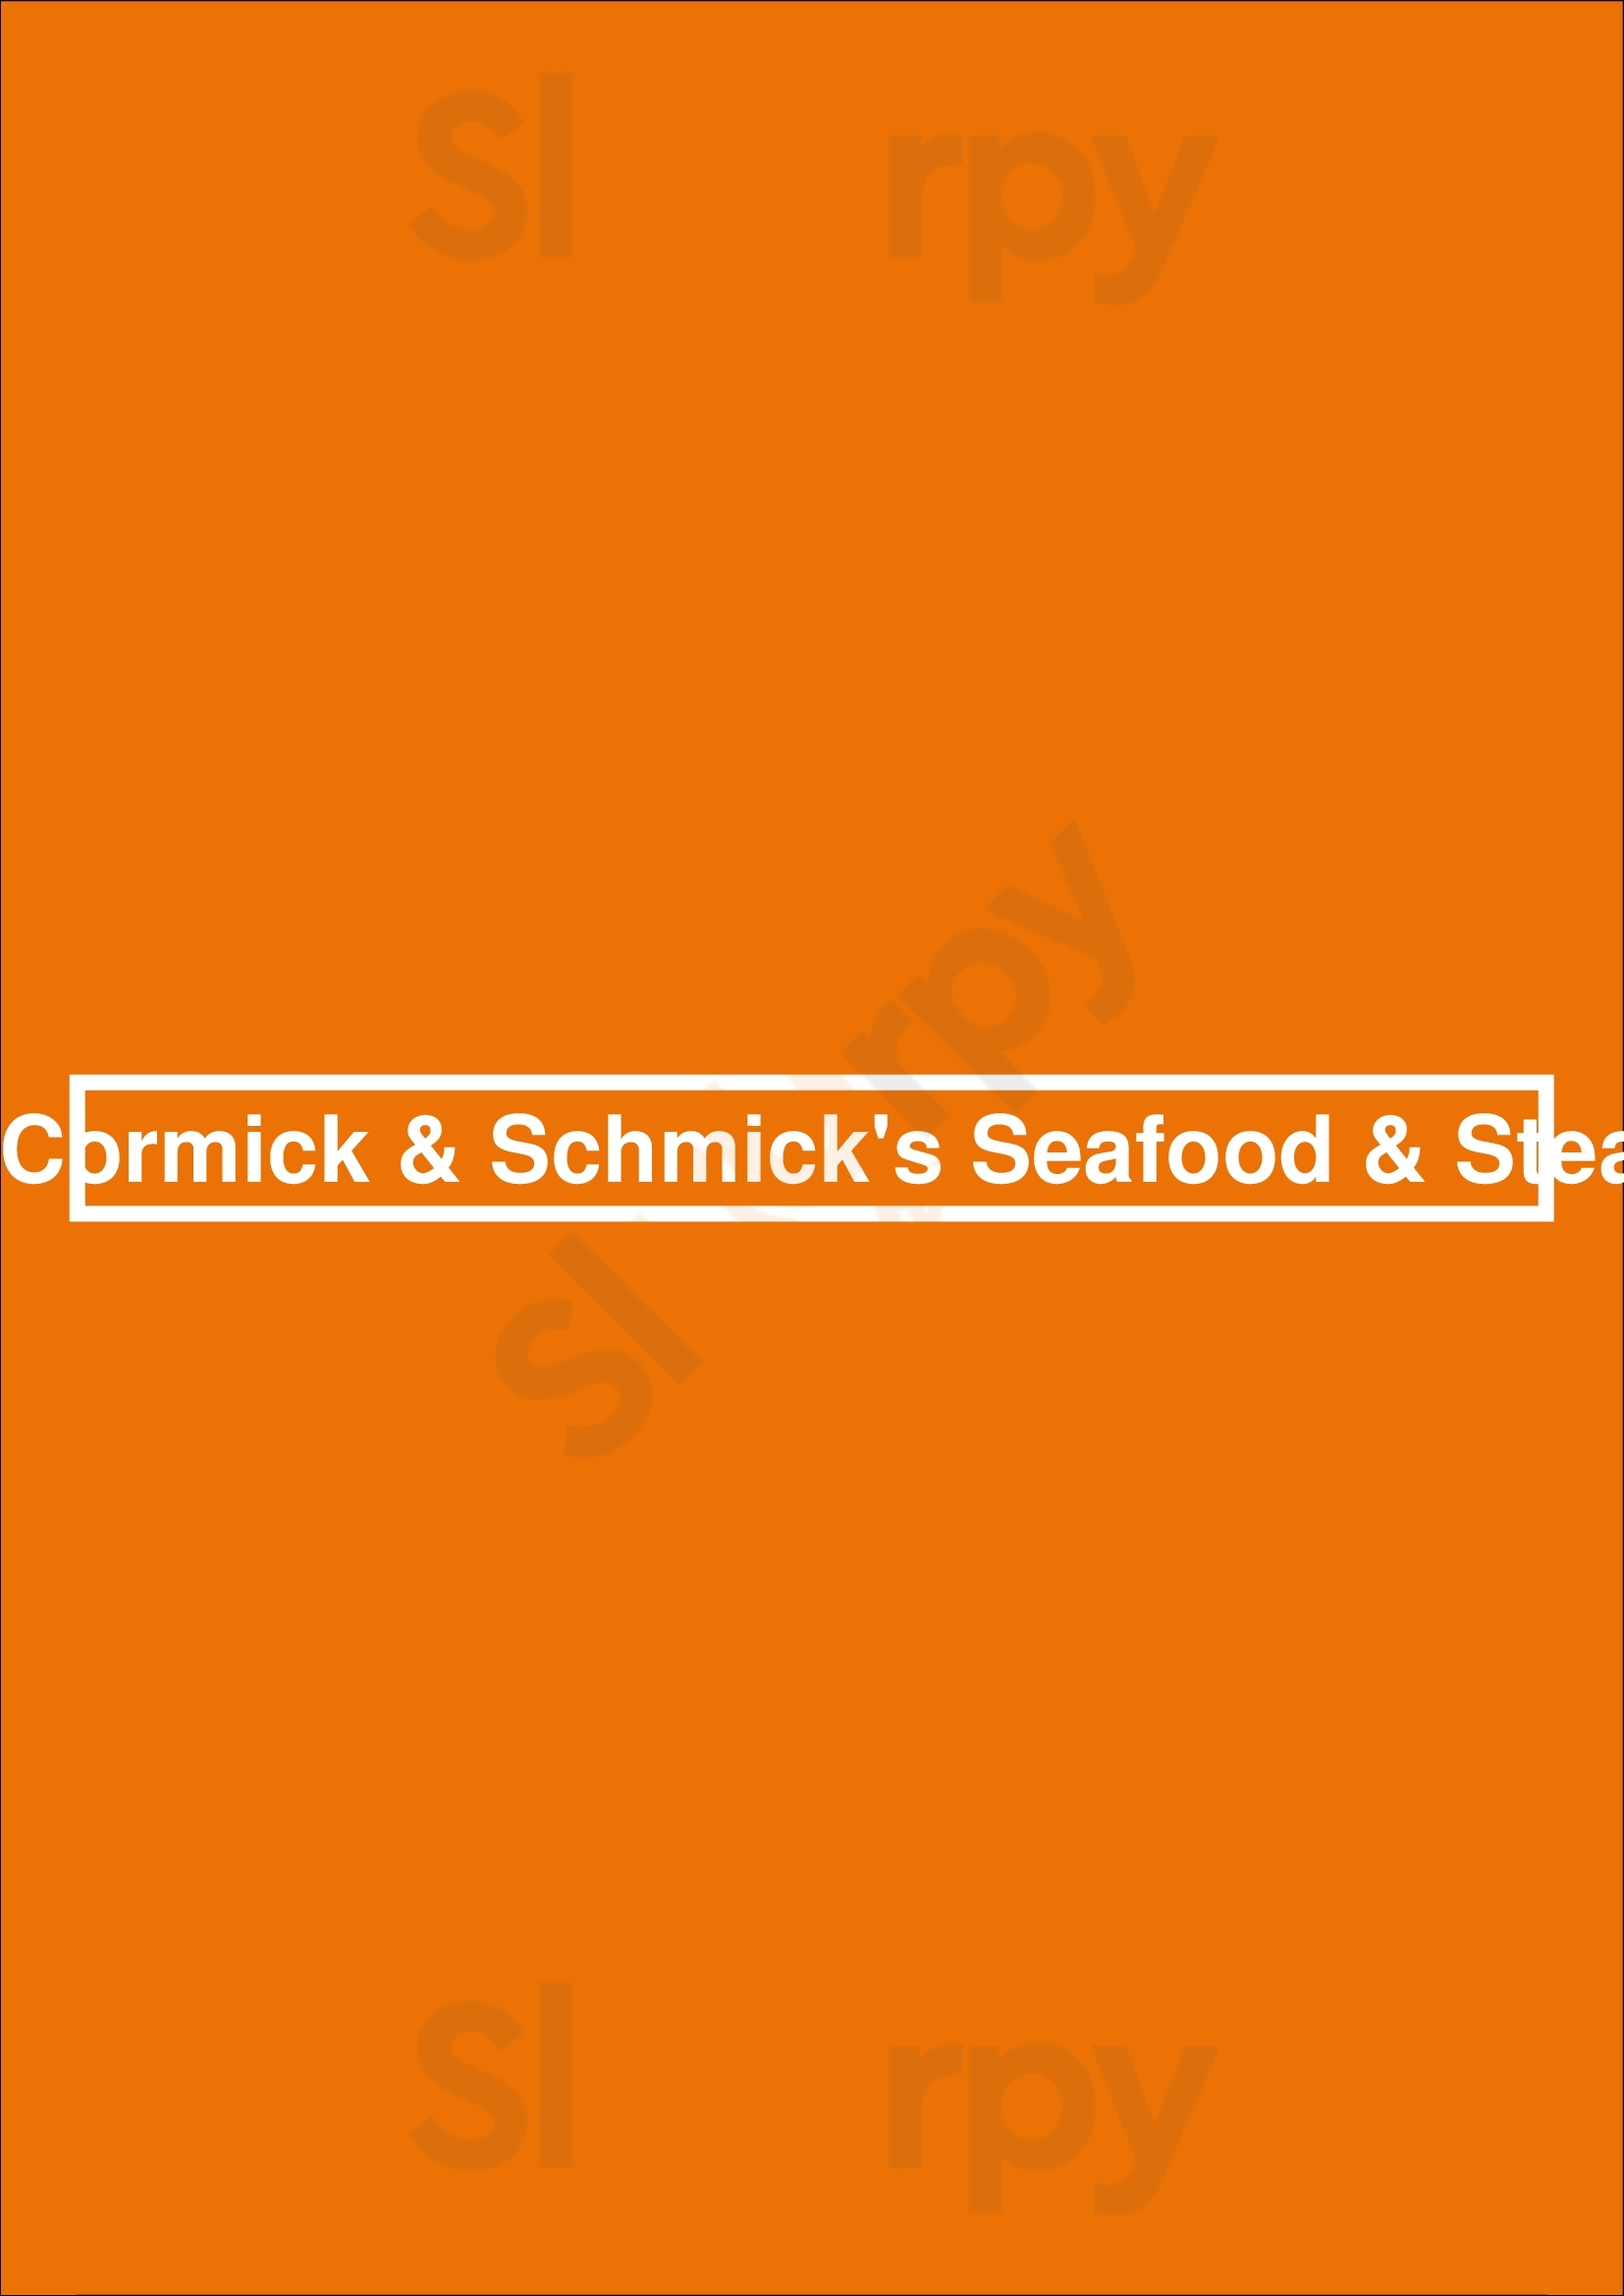 Mccormick & Schmick's Seafood & Steaks Indianapolis Menu - 1